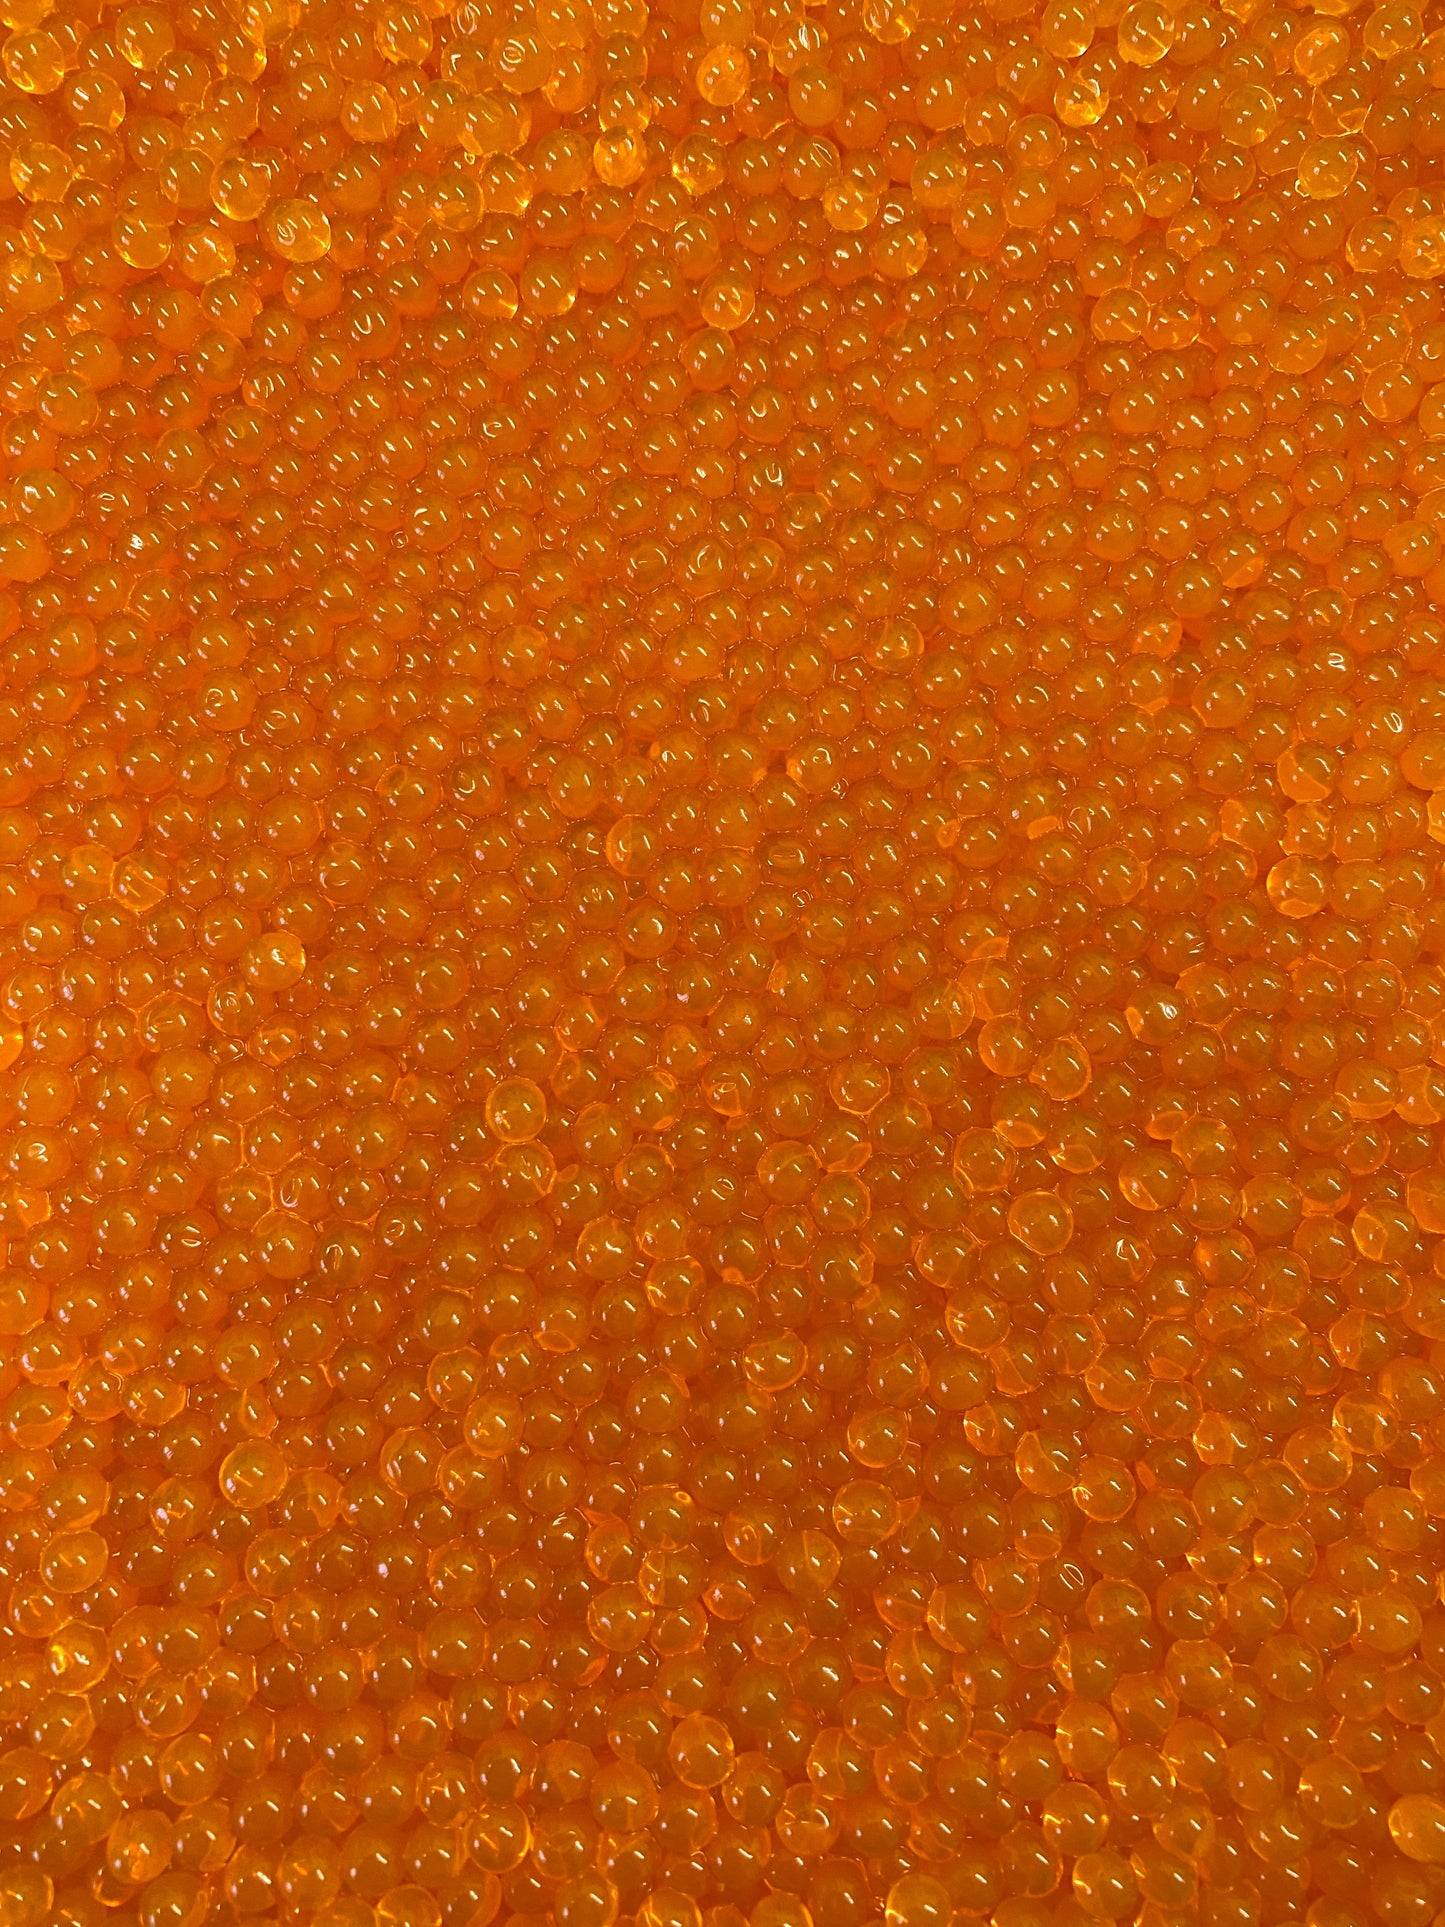 50,000 Vibrant Orange Gel Balls - BlasterMasters